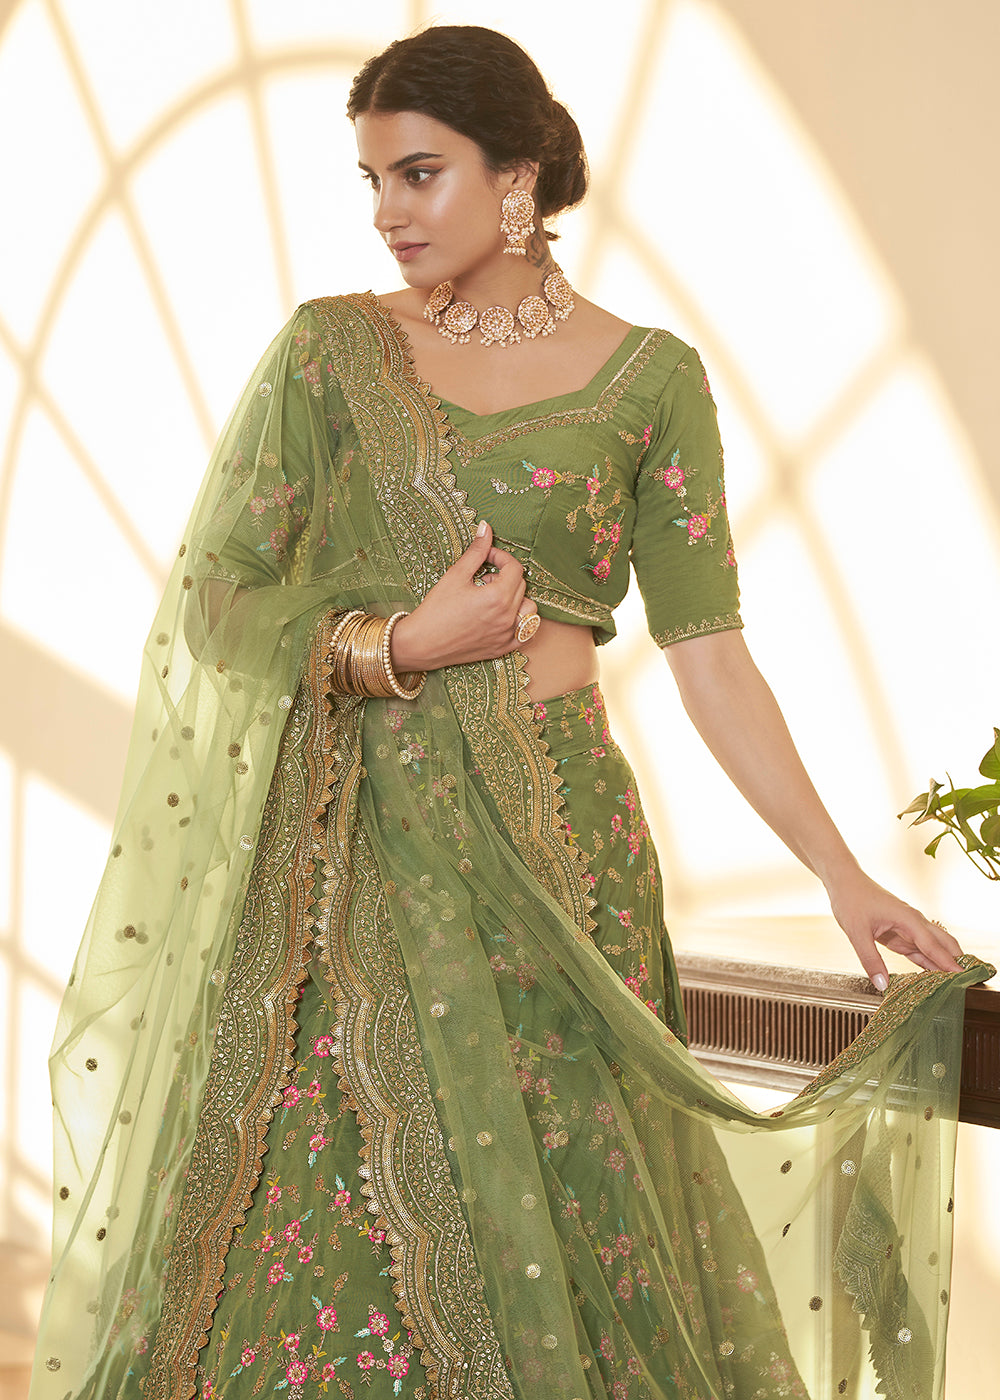 Buy Now Chinon Silk Green Multi Embroidered Wedding Lehenga Choli Online in USA, UK, Canada & Worldwide at Empress Clothing. 